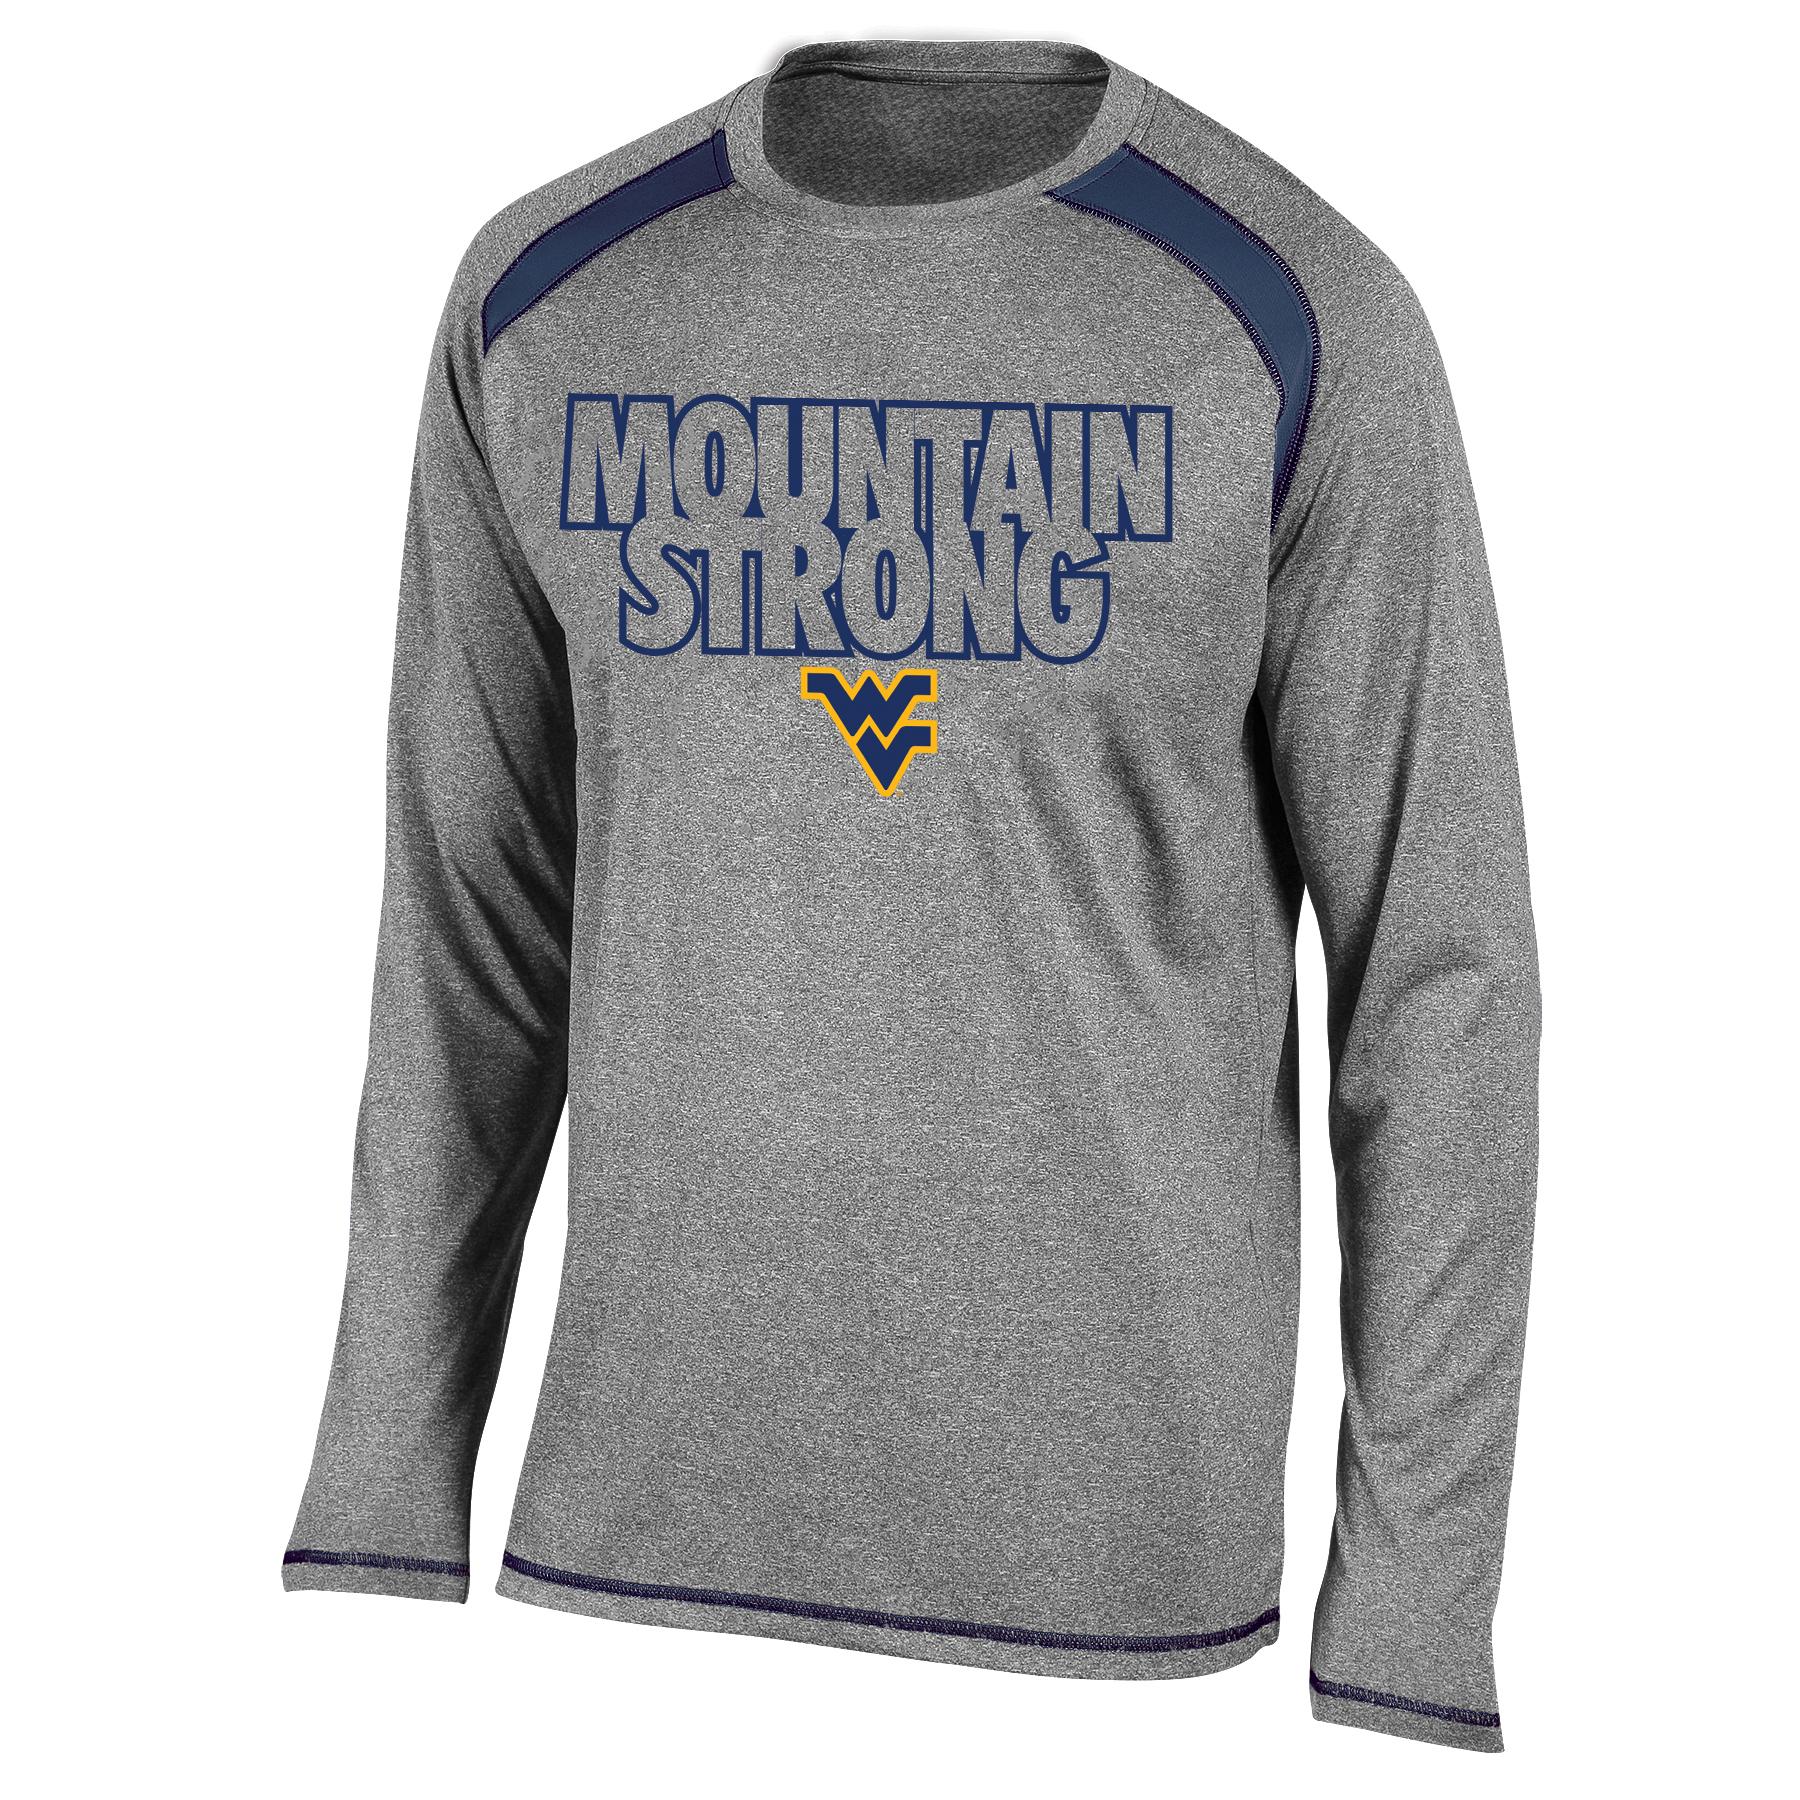 NCAA Men's Big & Tall Athletic Shirt - West Virginia University Mountaineers